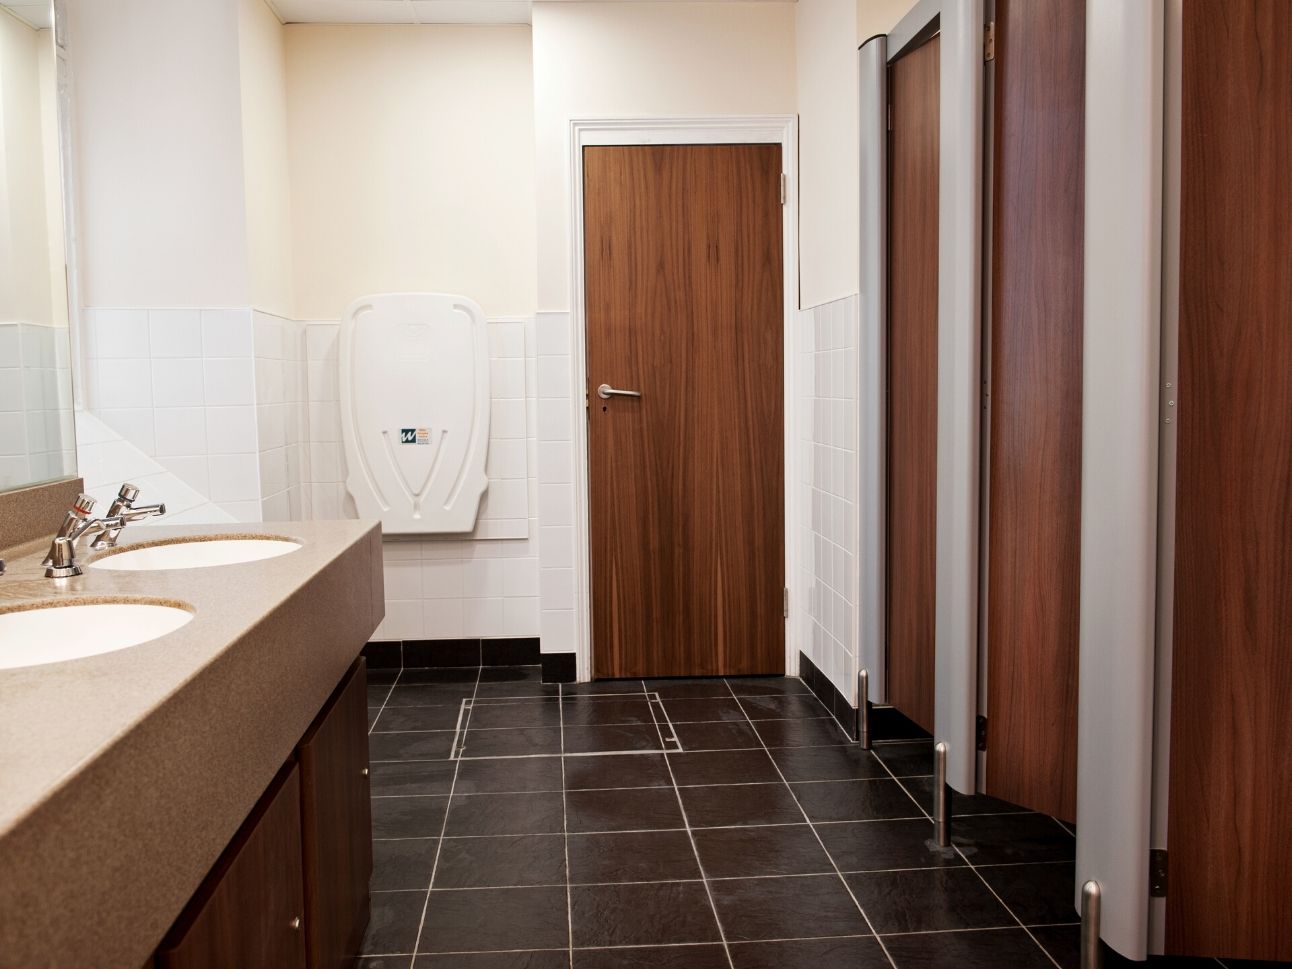 Charlton House Toilet Refurbishment | Case Study | Commercial Washrooms